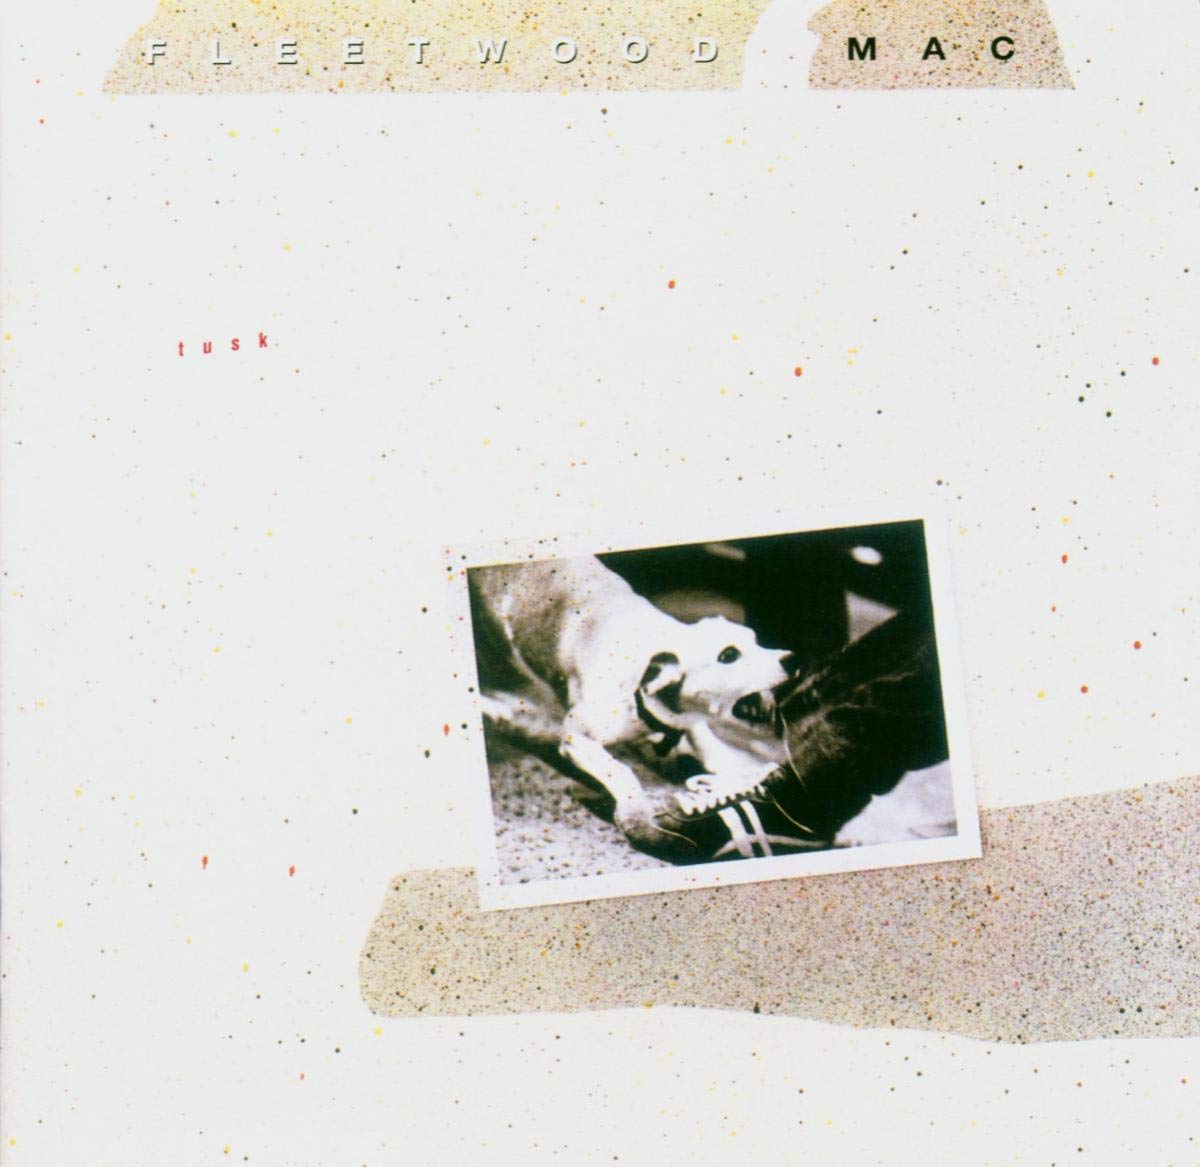 Fleetwood Mac - Tusk LP (2-disc pressing)